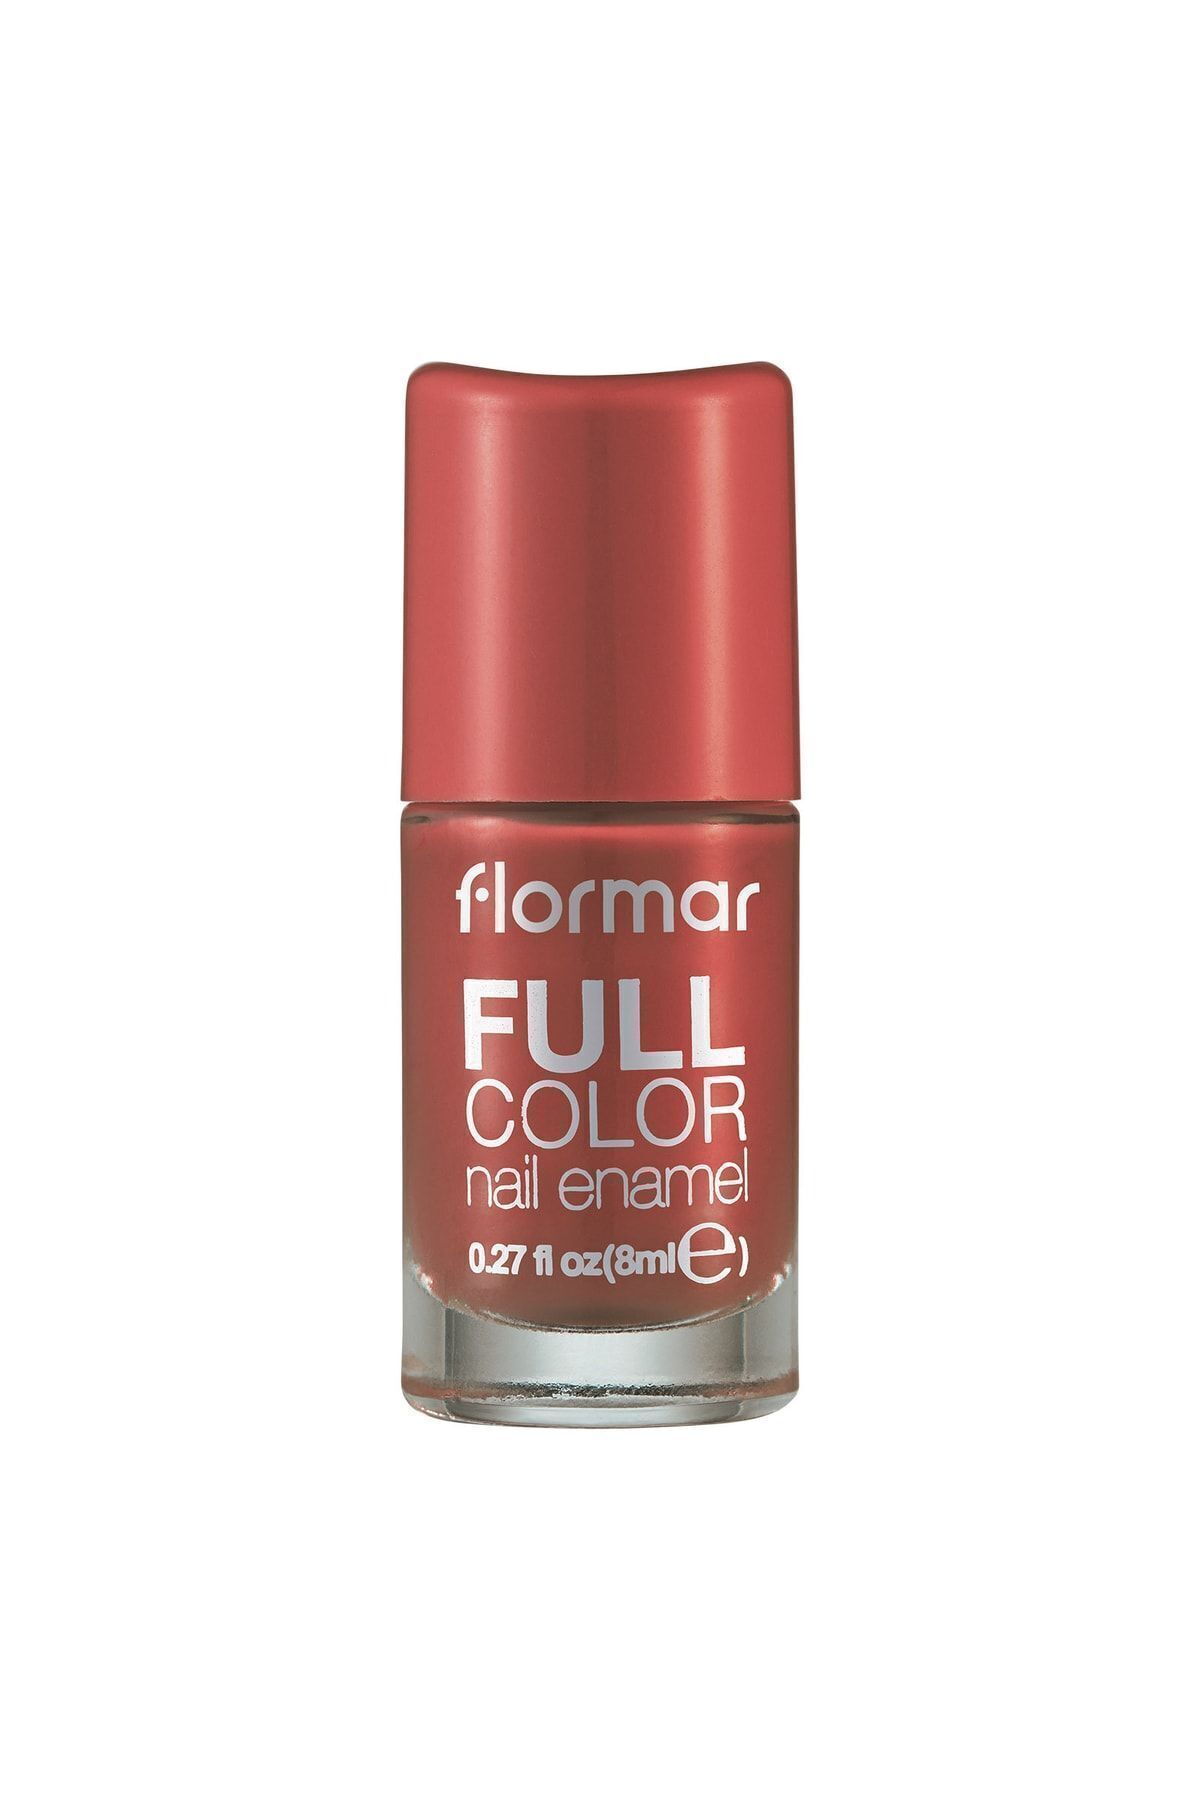 Flormar Full Color Nail Enamel 0414097